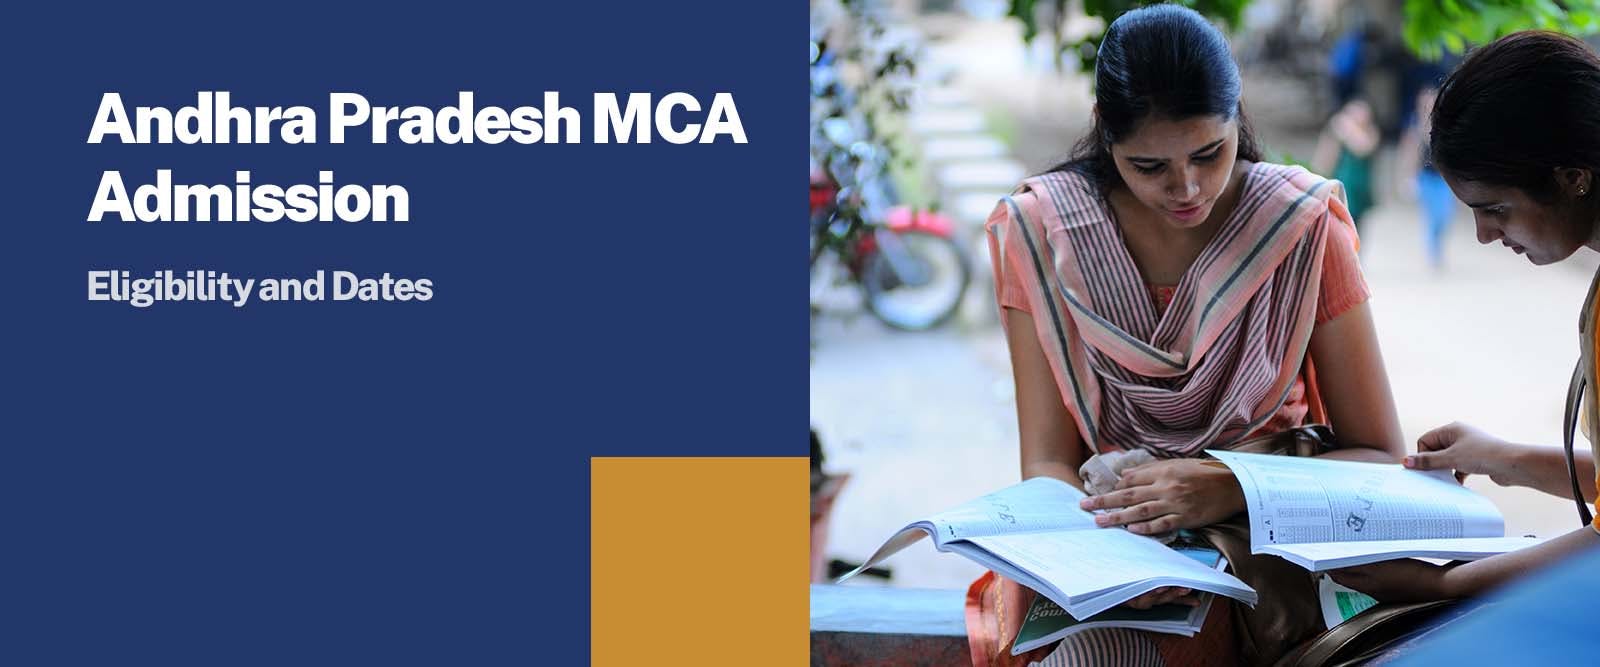 Andhra Pradesh MCA Admission: Eligibility and Dates